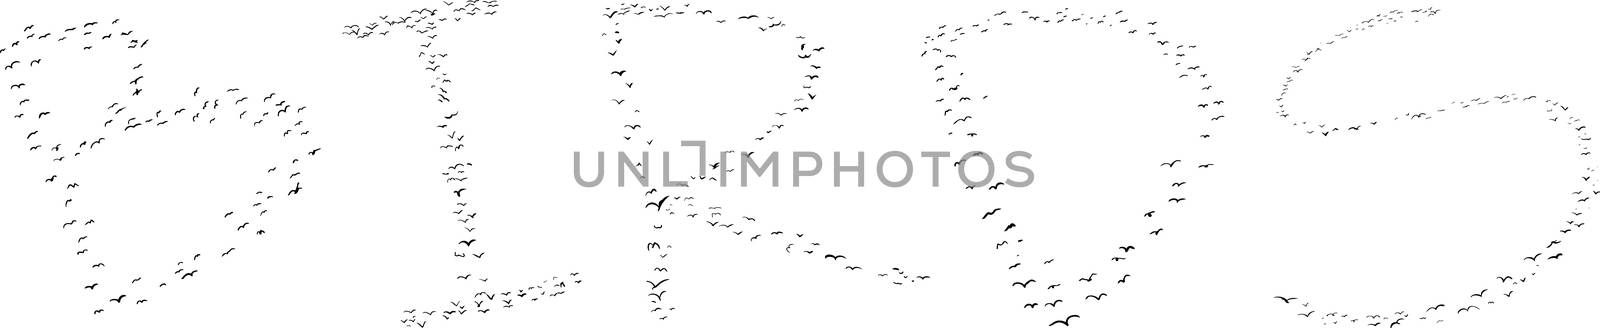 Flock of birds illustration with white background